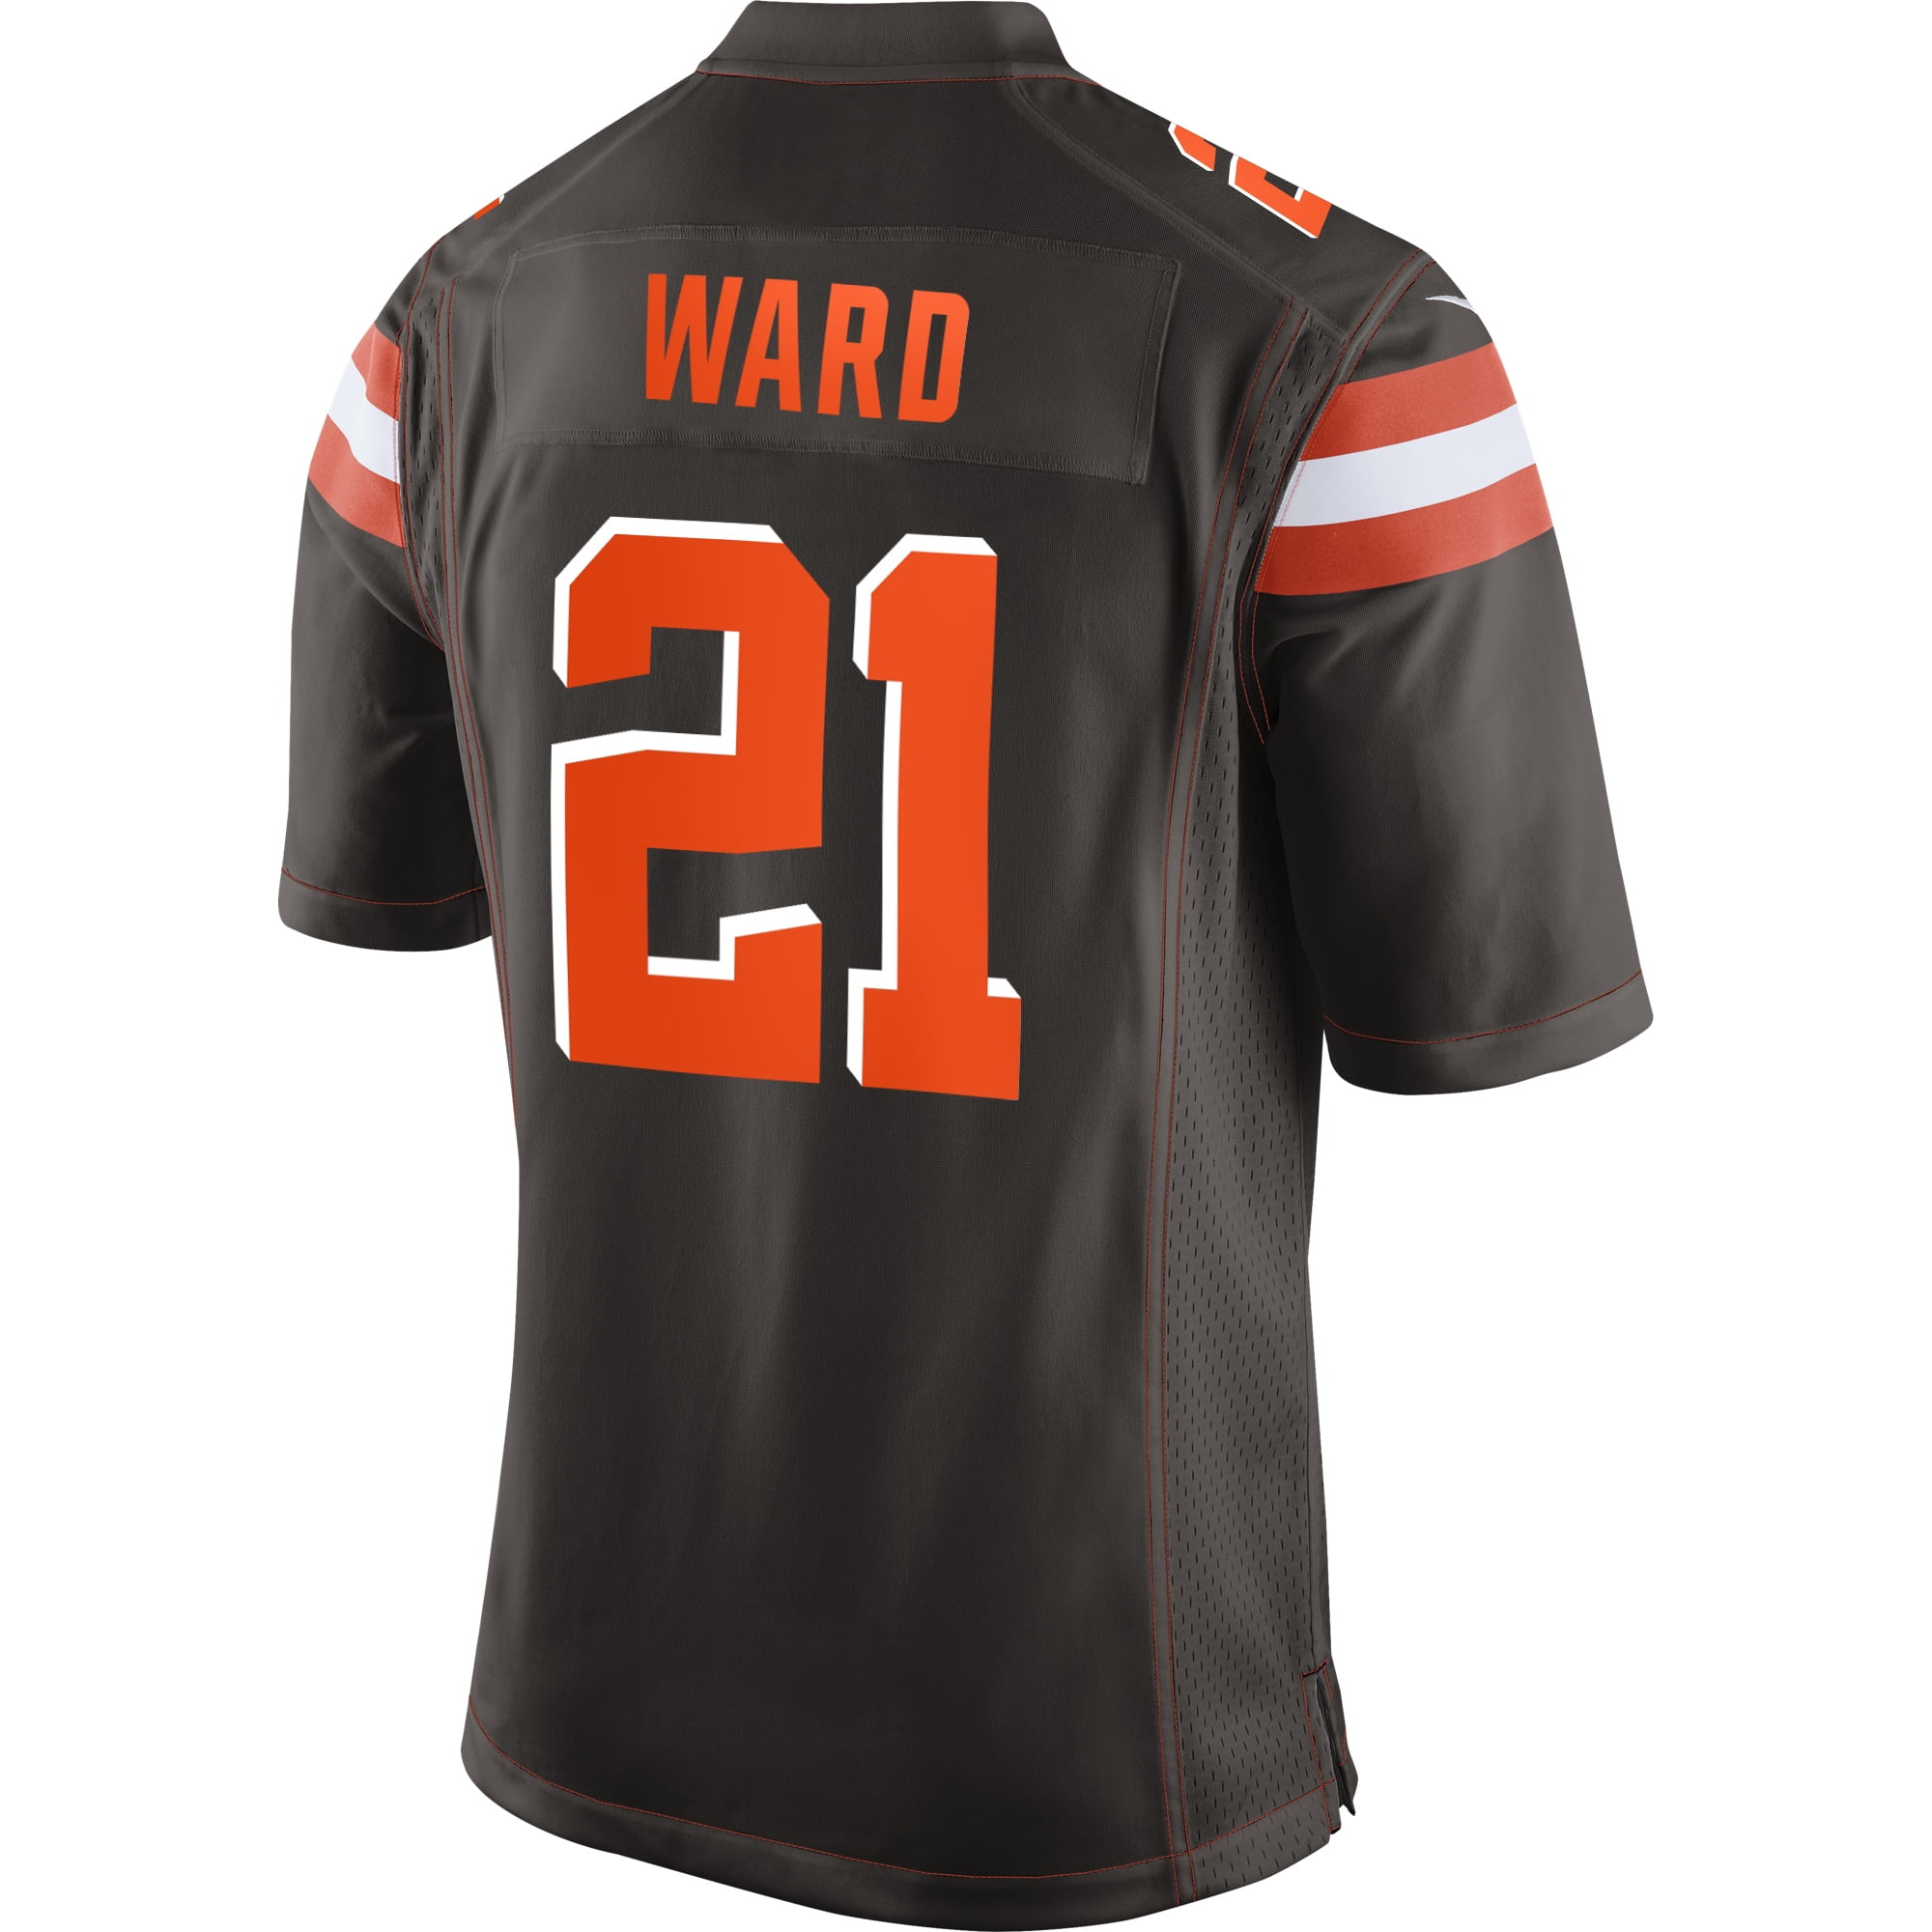 ward browns jersey